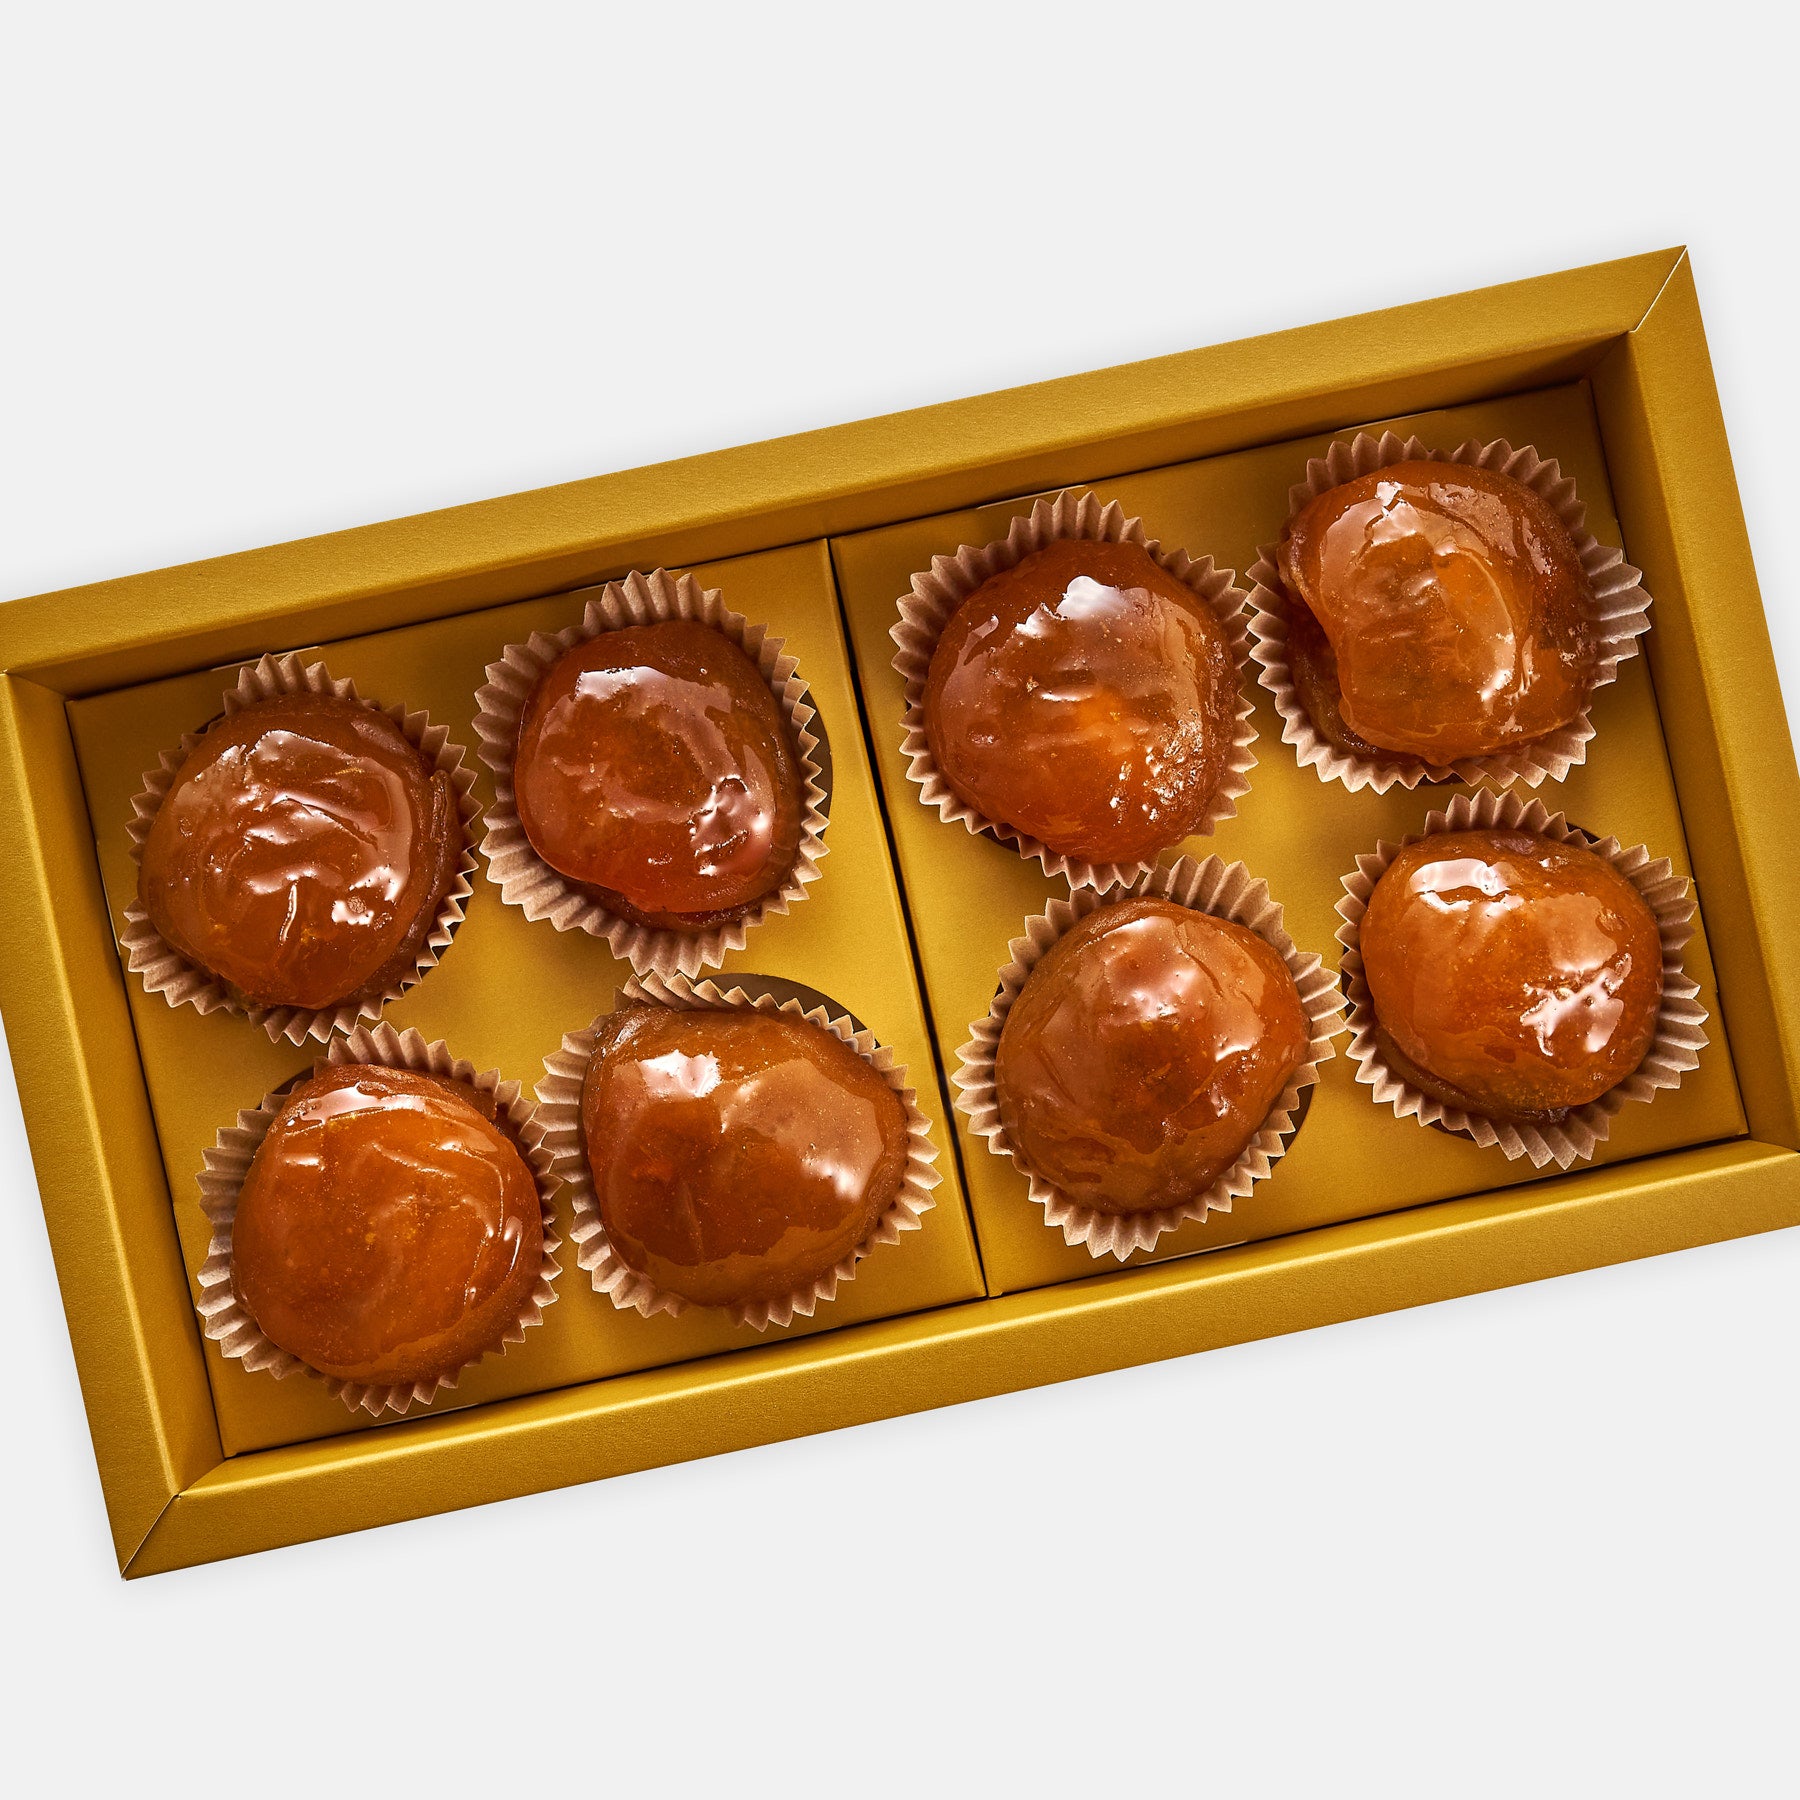 Glazed, crystallized apricots - ghraoui-chocolate